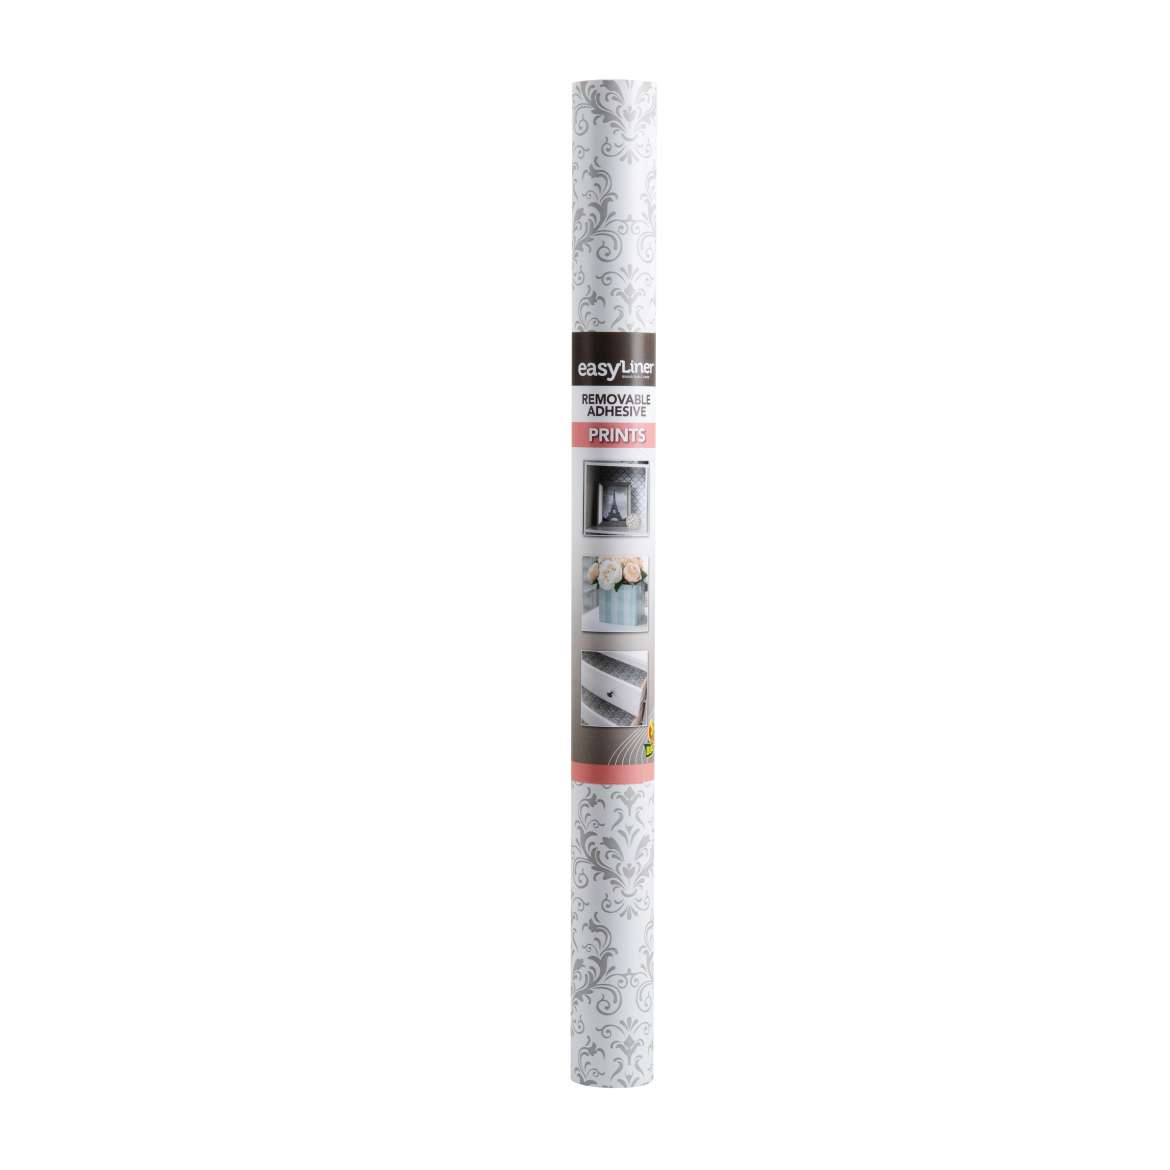 EasyLiner® Adhesive Prints Shelf Liner - Gray Damask, 20 in. x 15 ft.